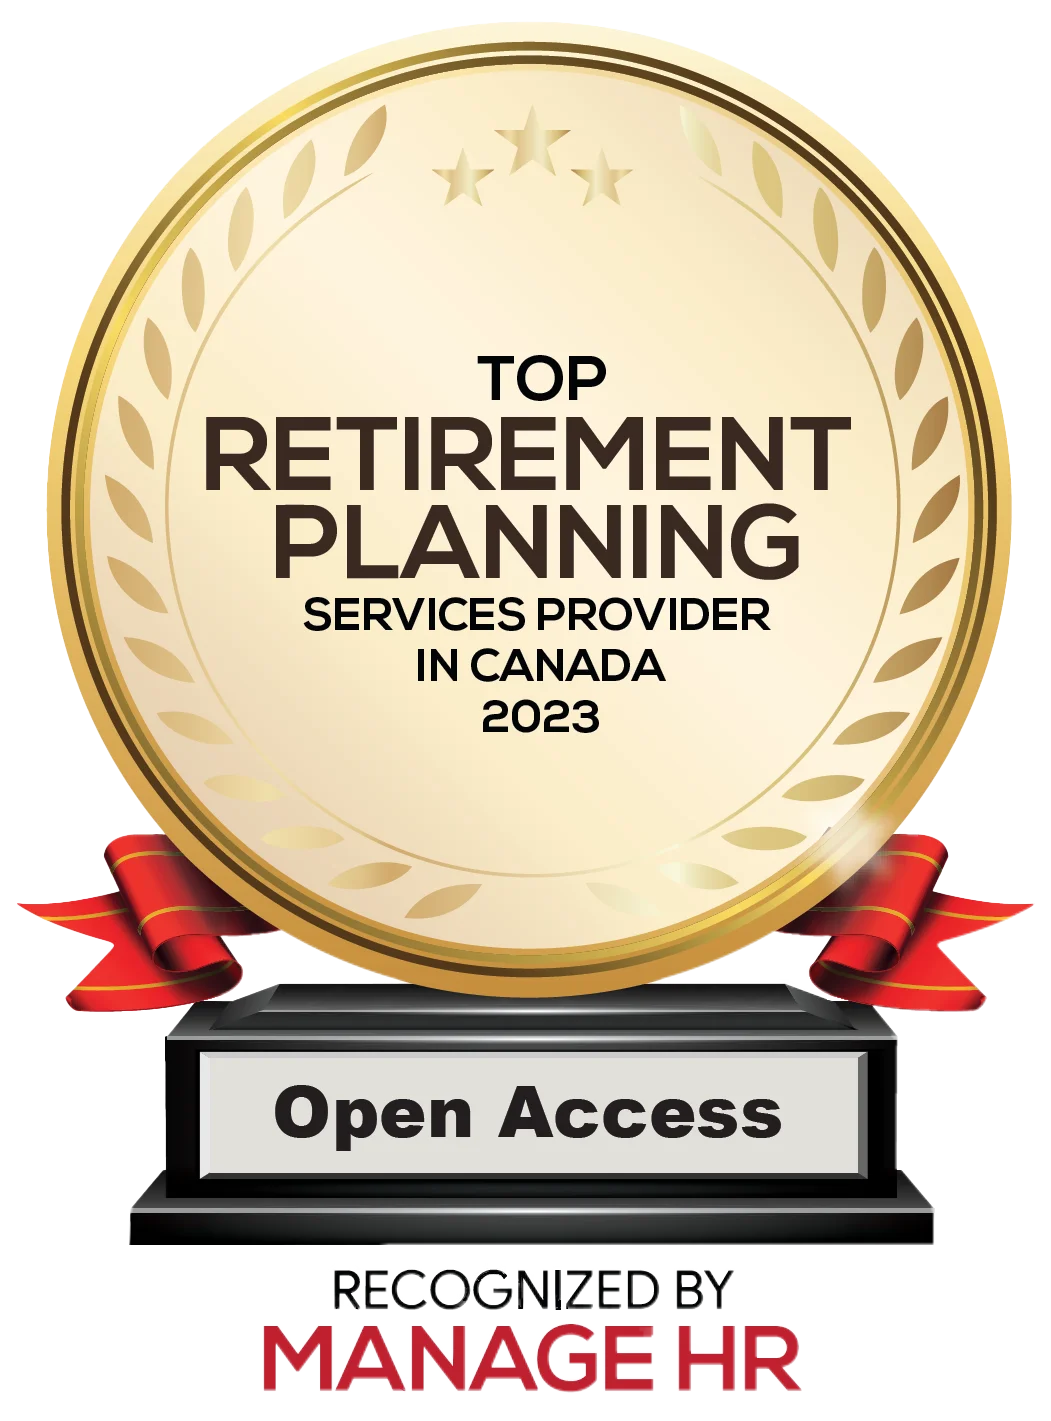 Canadian retirement plan provider